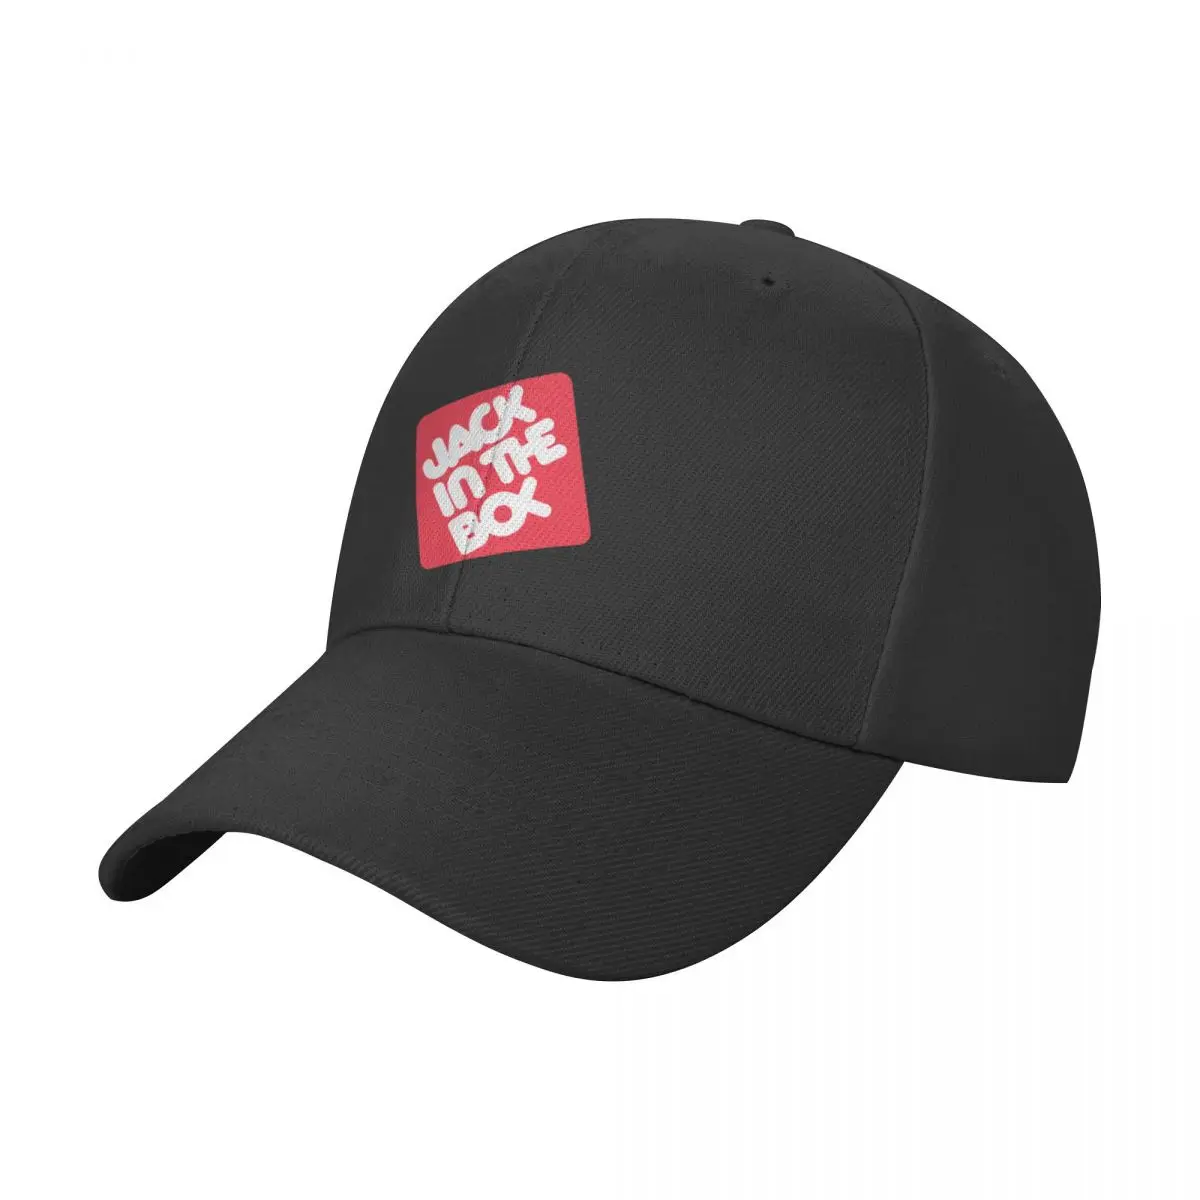 Бестселлер - Товарная кепка Jack in The Box, бейсбольная кепка, рыболовная шляпа, шляпа для женщин, мужская кепка 0